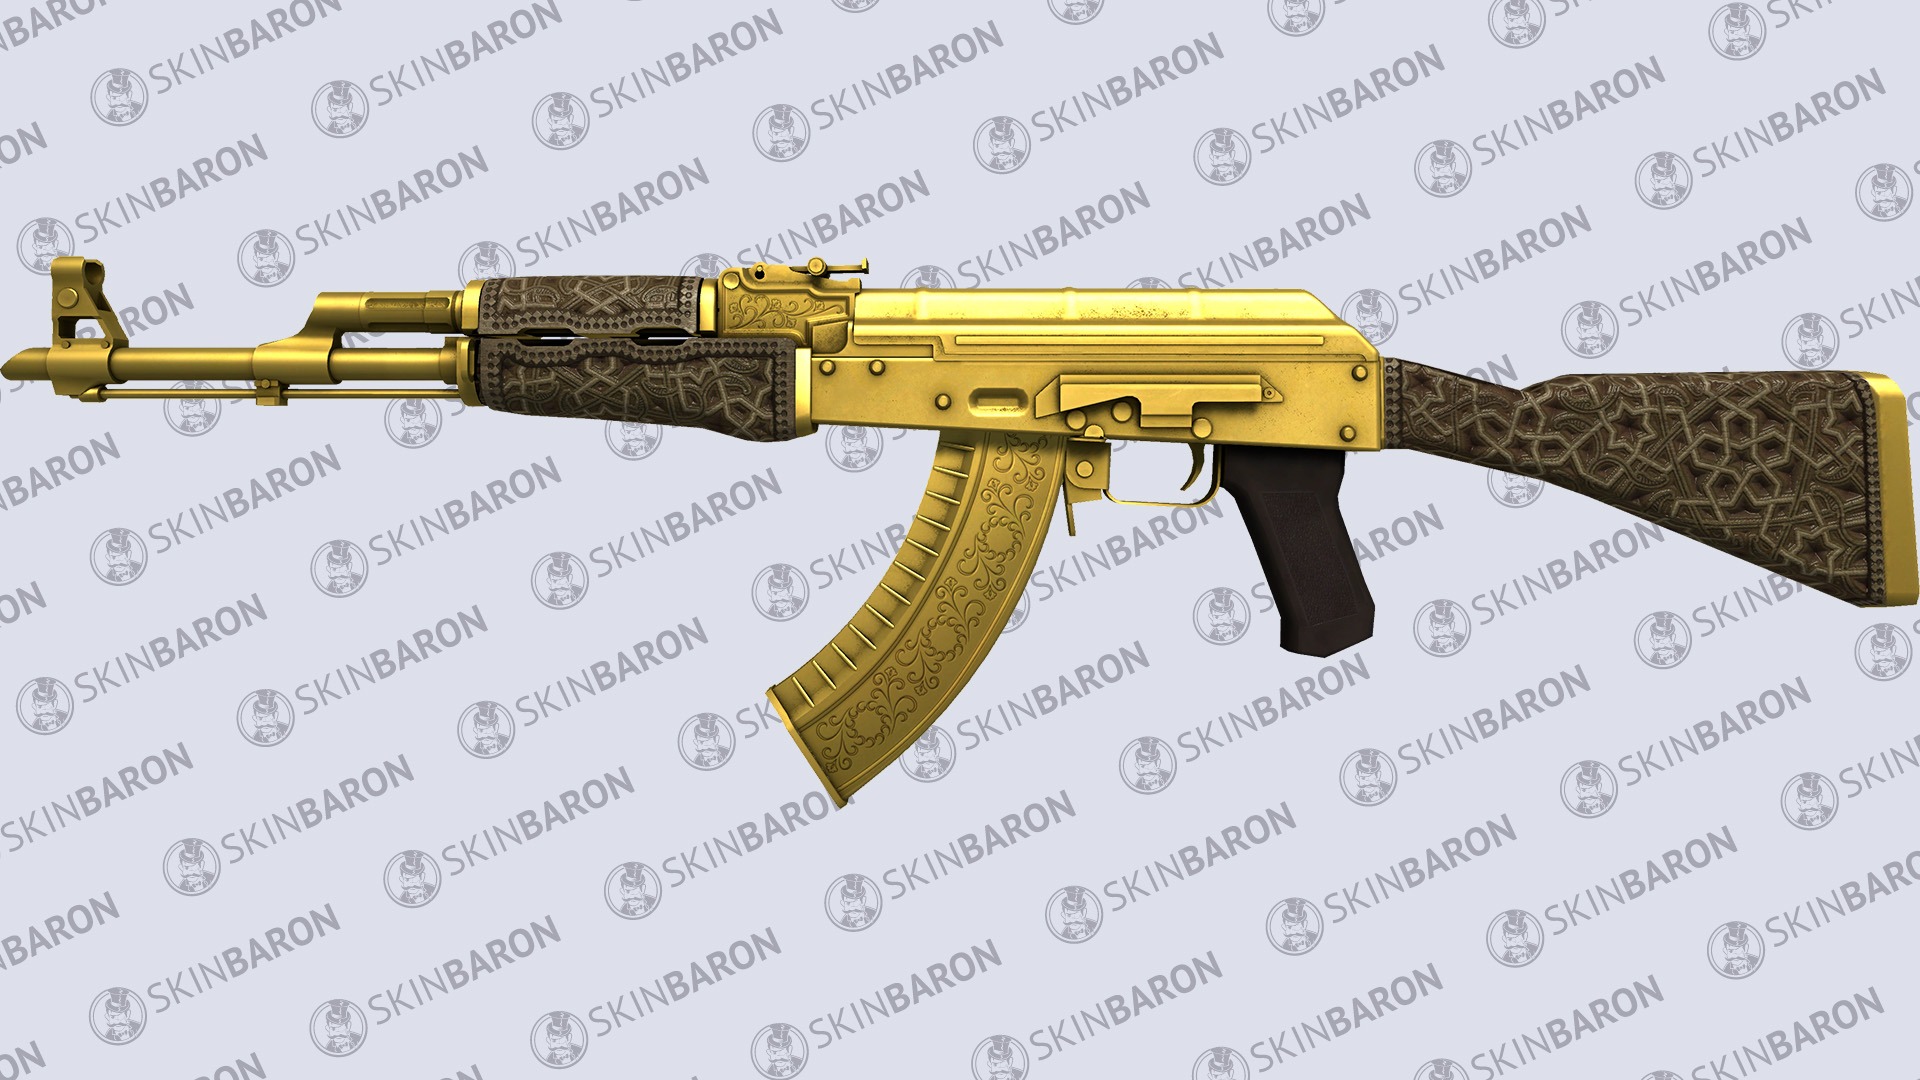 AK-47 Gold Arabesque - Most Expensive AK-47 skins